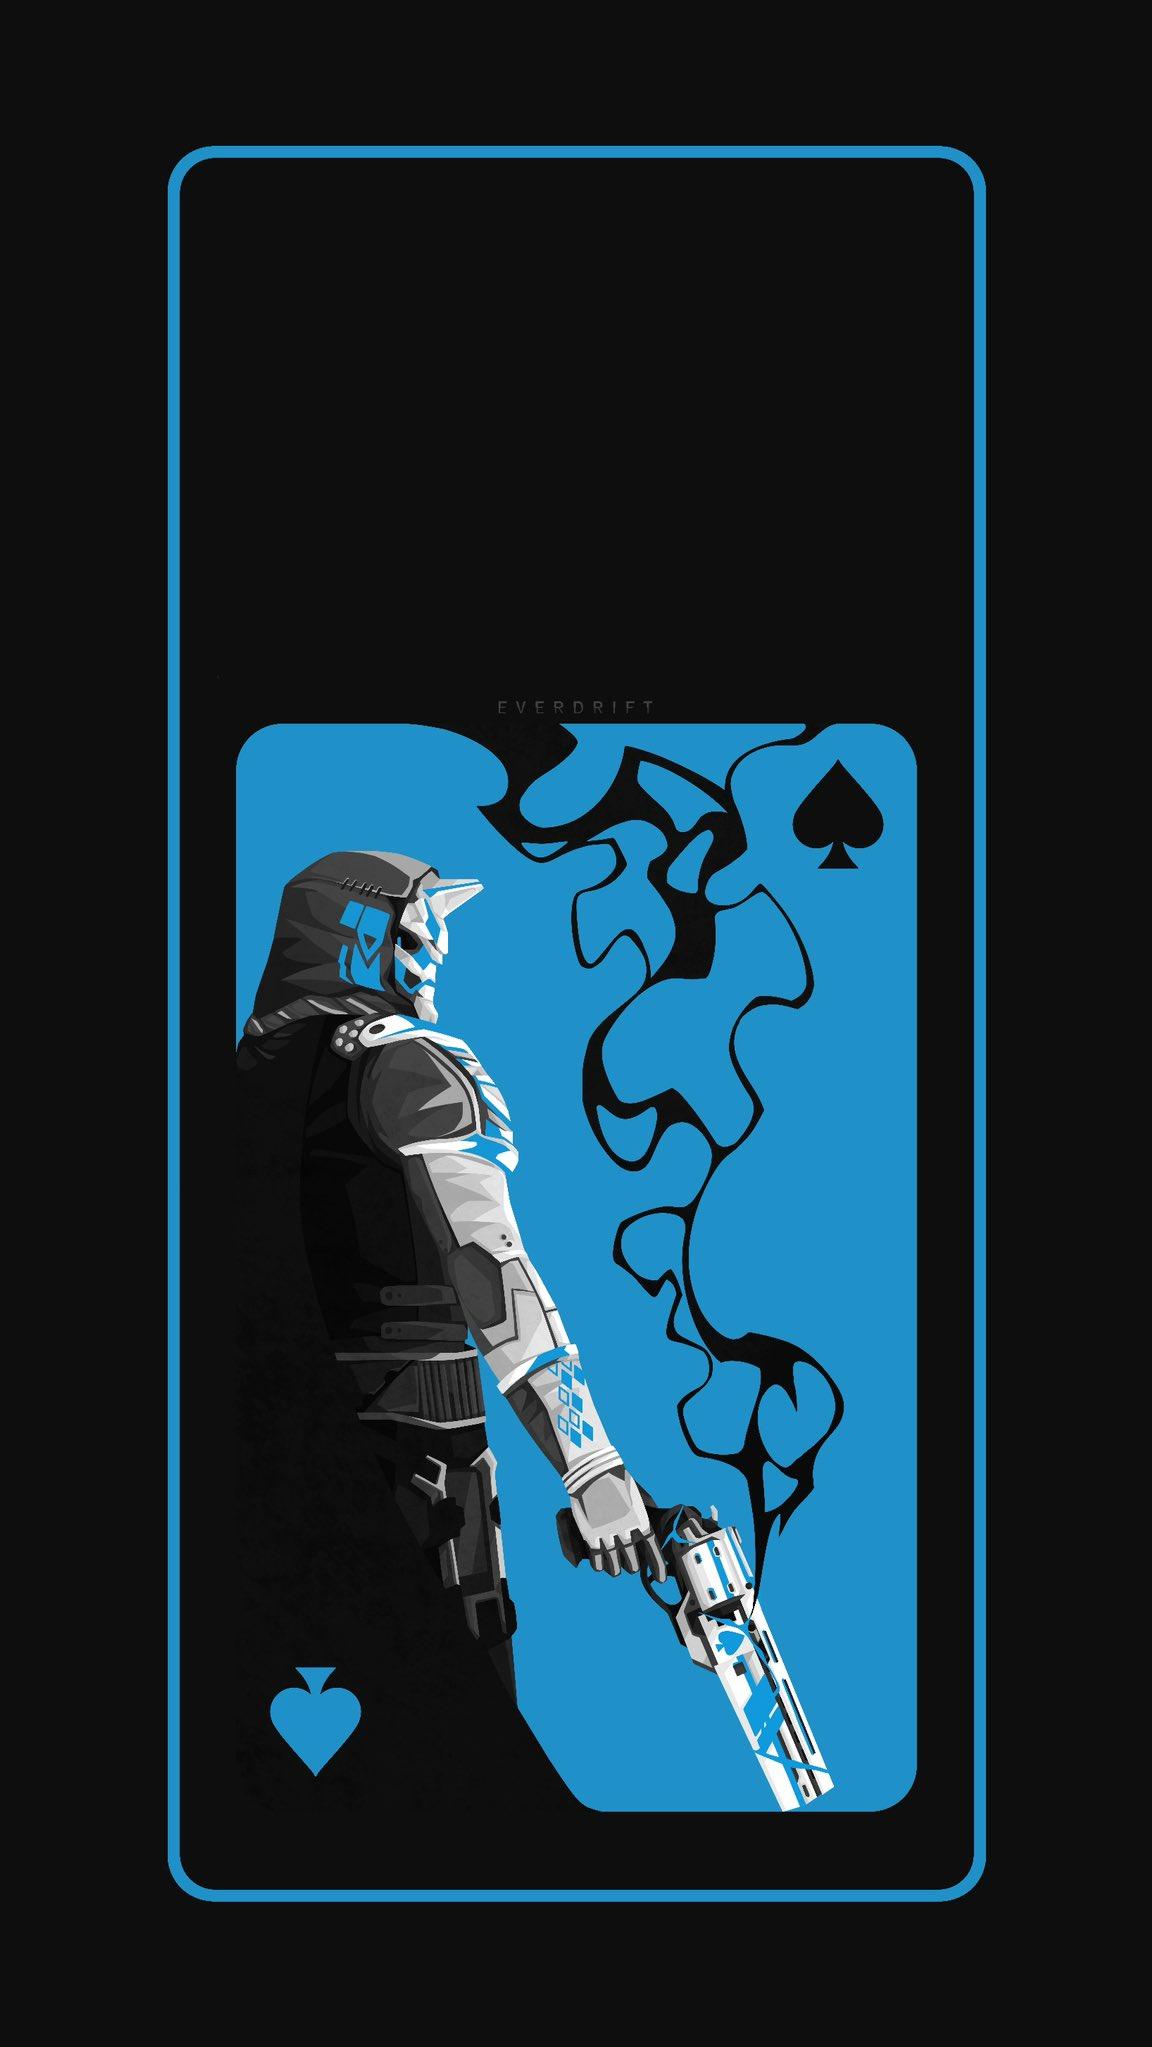 Destiny 2 iPhone Wallpaper Image 1152x2048